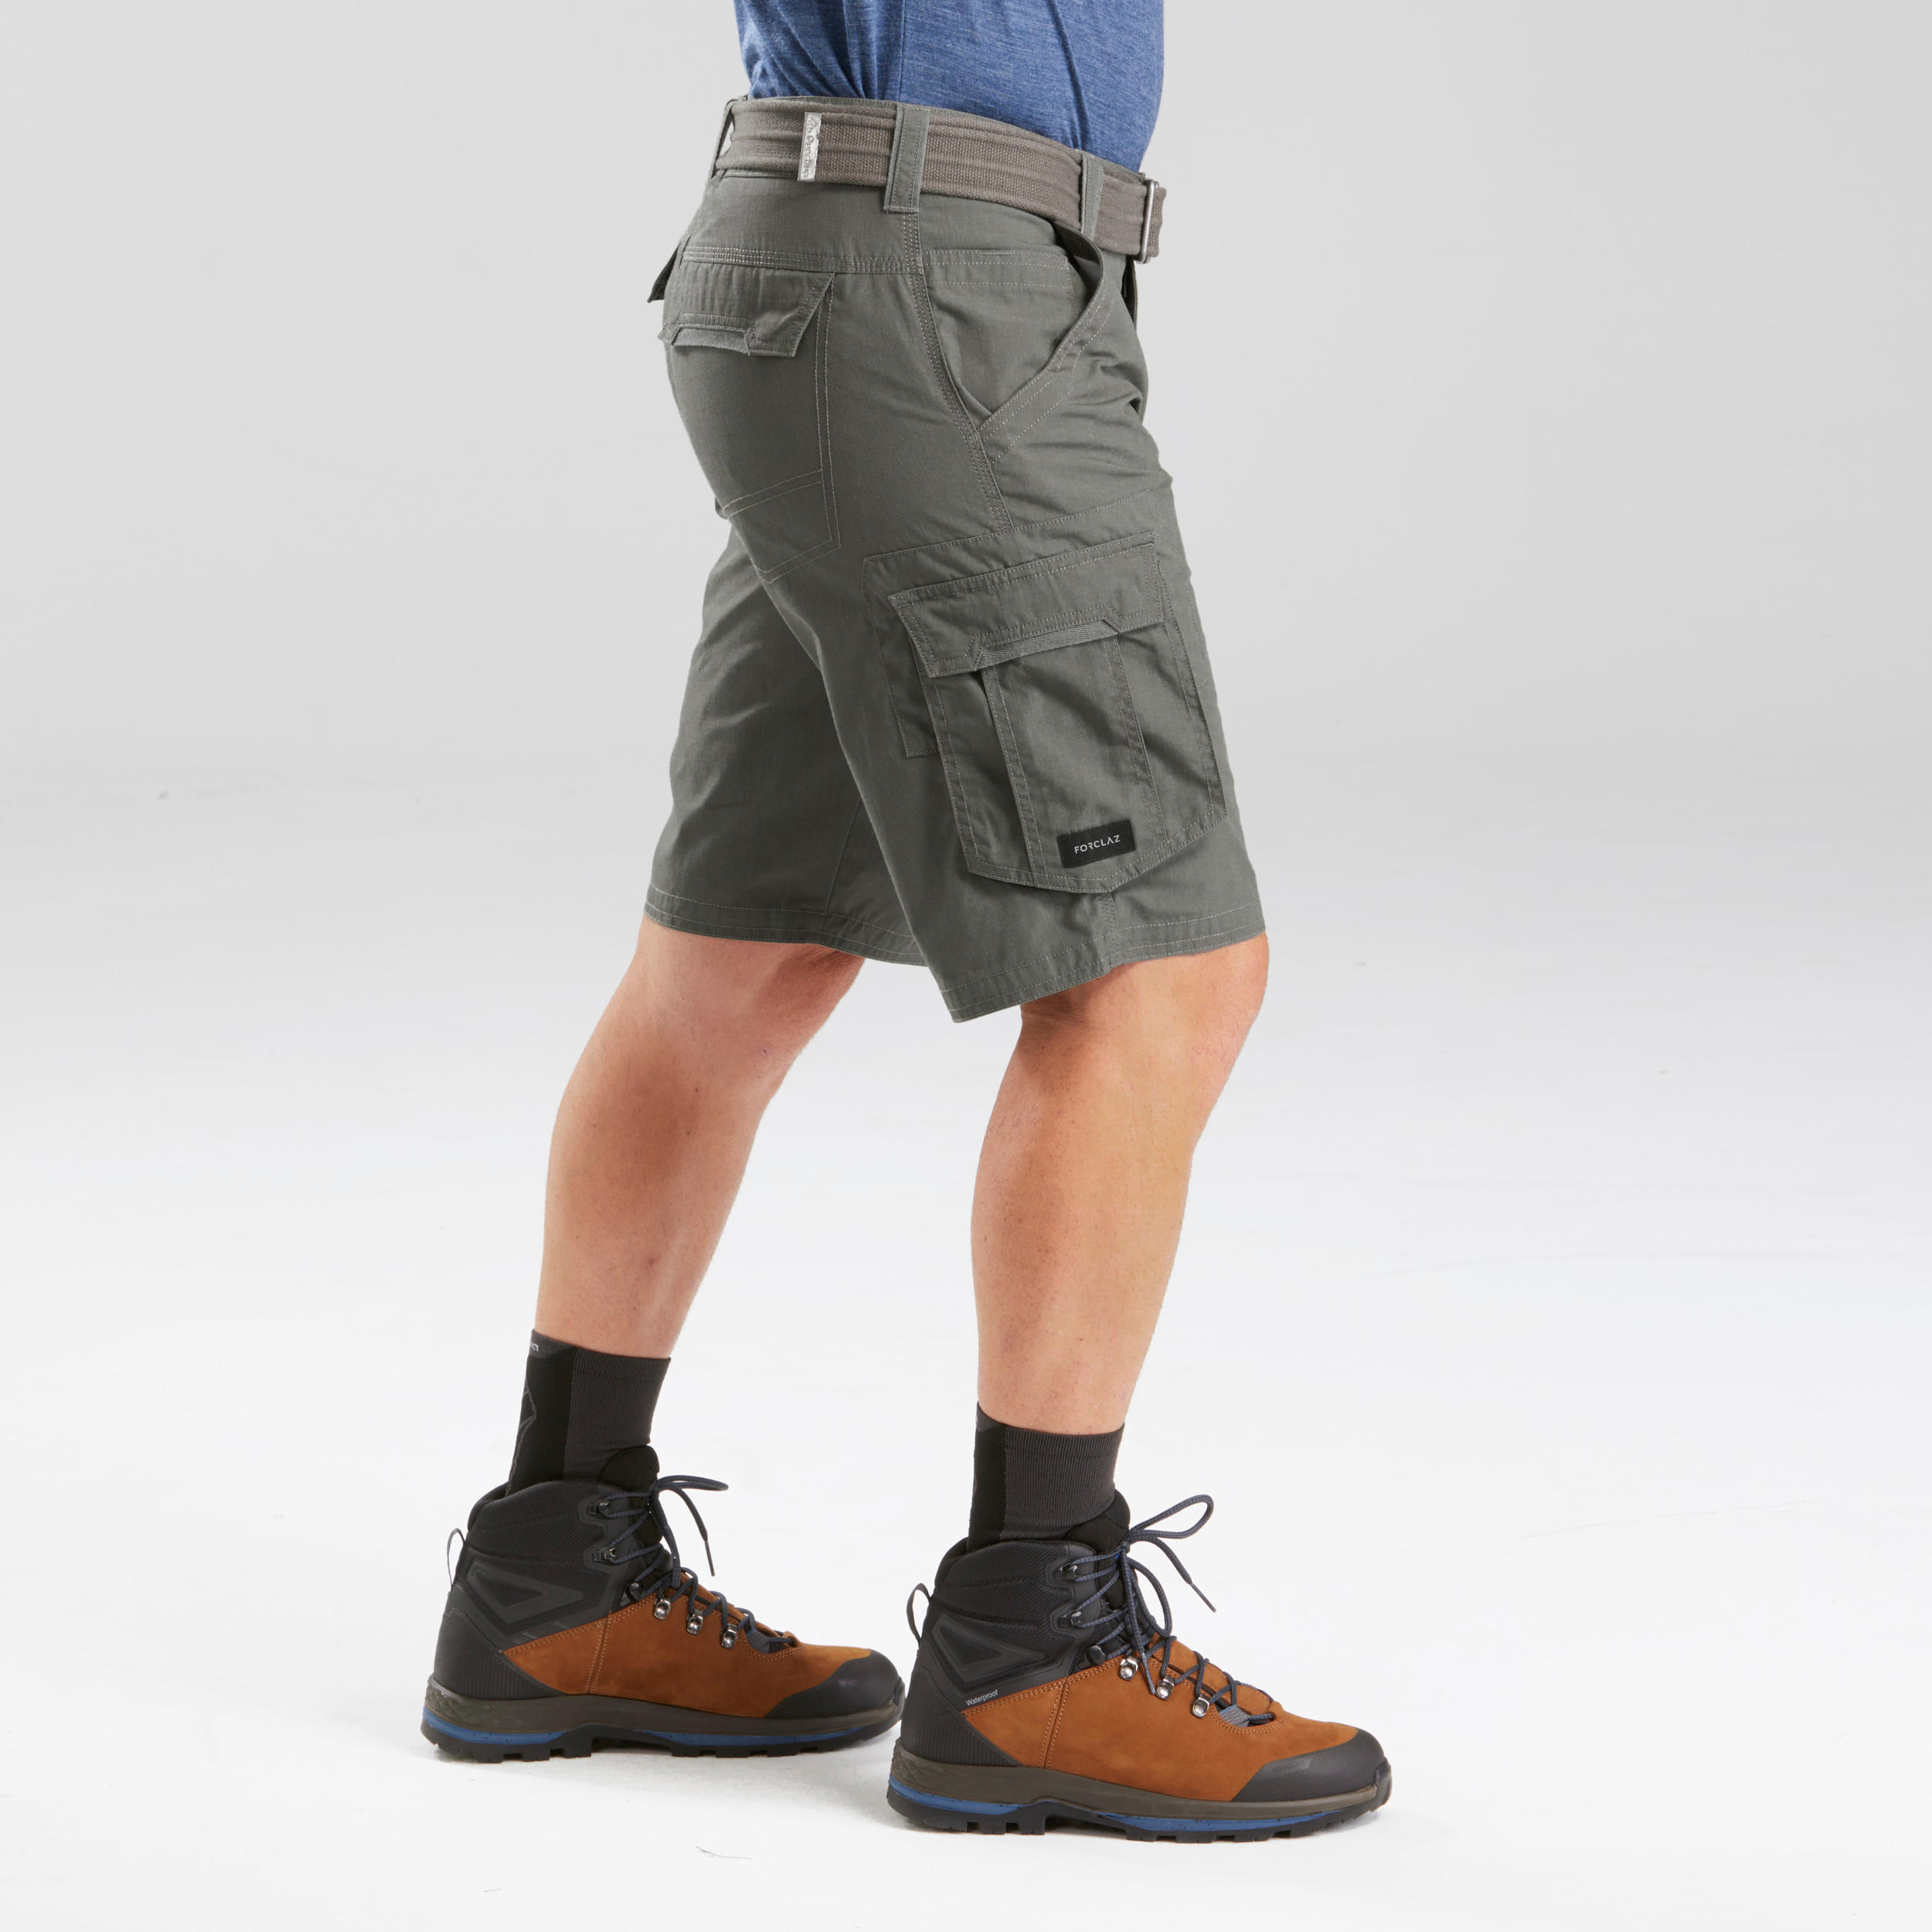 Men’s Hiking Shorts - Travel 100 - Khaki brown - Forclaz - Decathlon